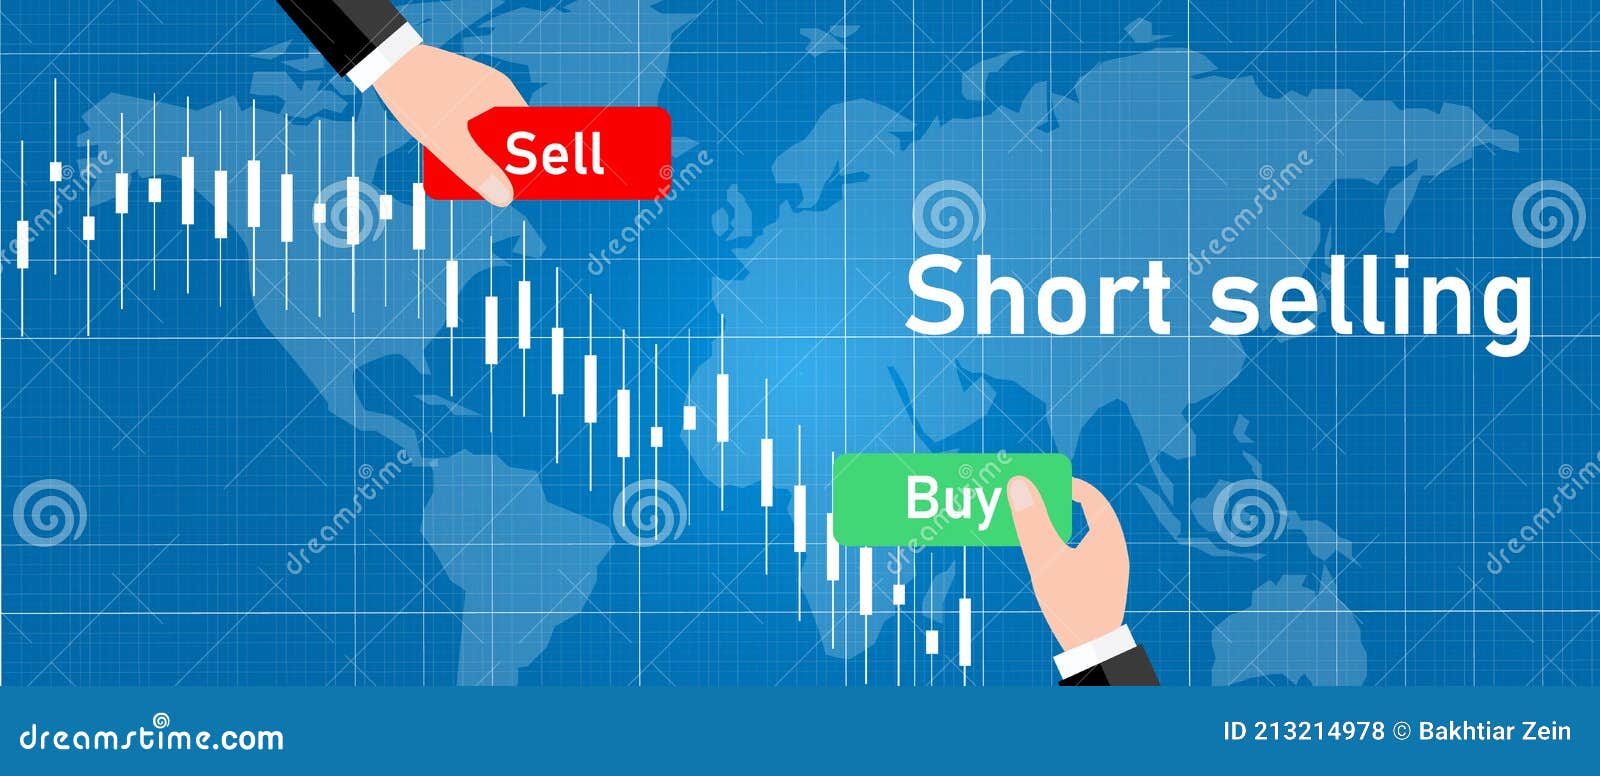 What is Short Selling? - - Robinhood